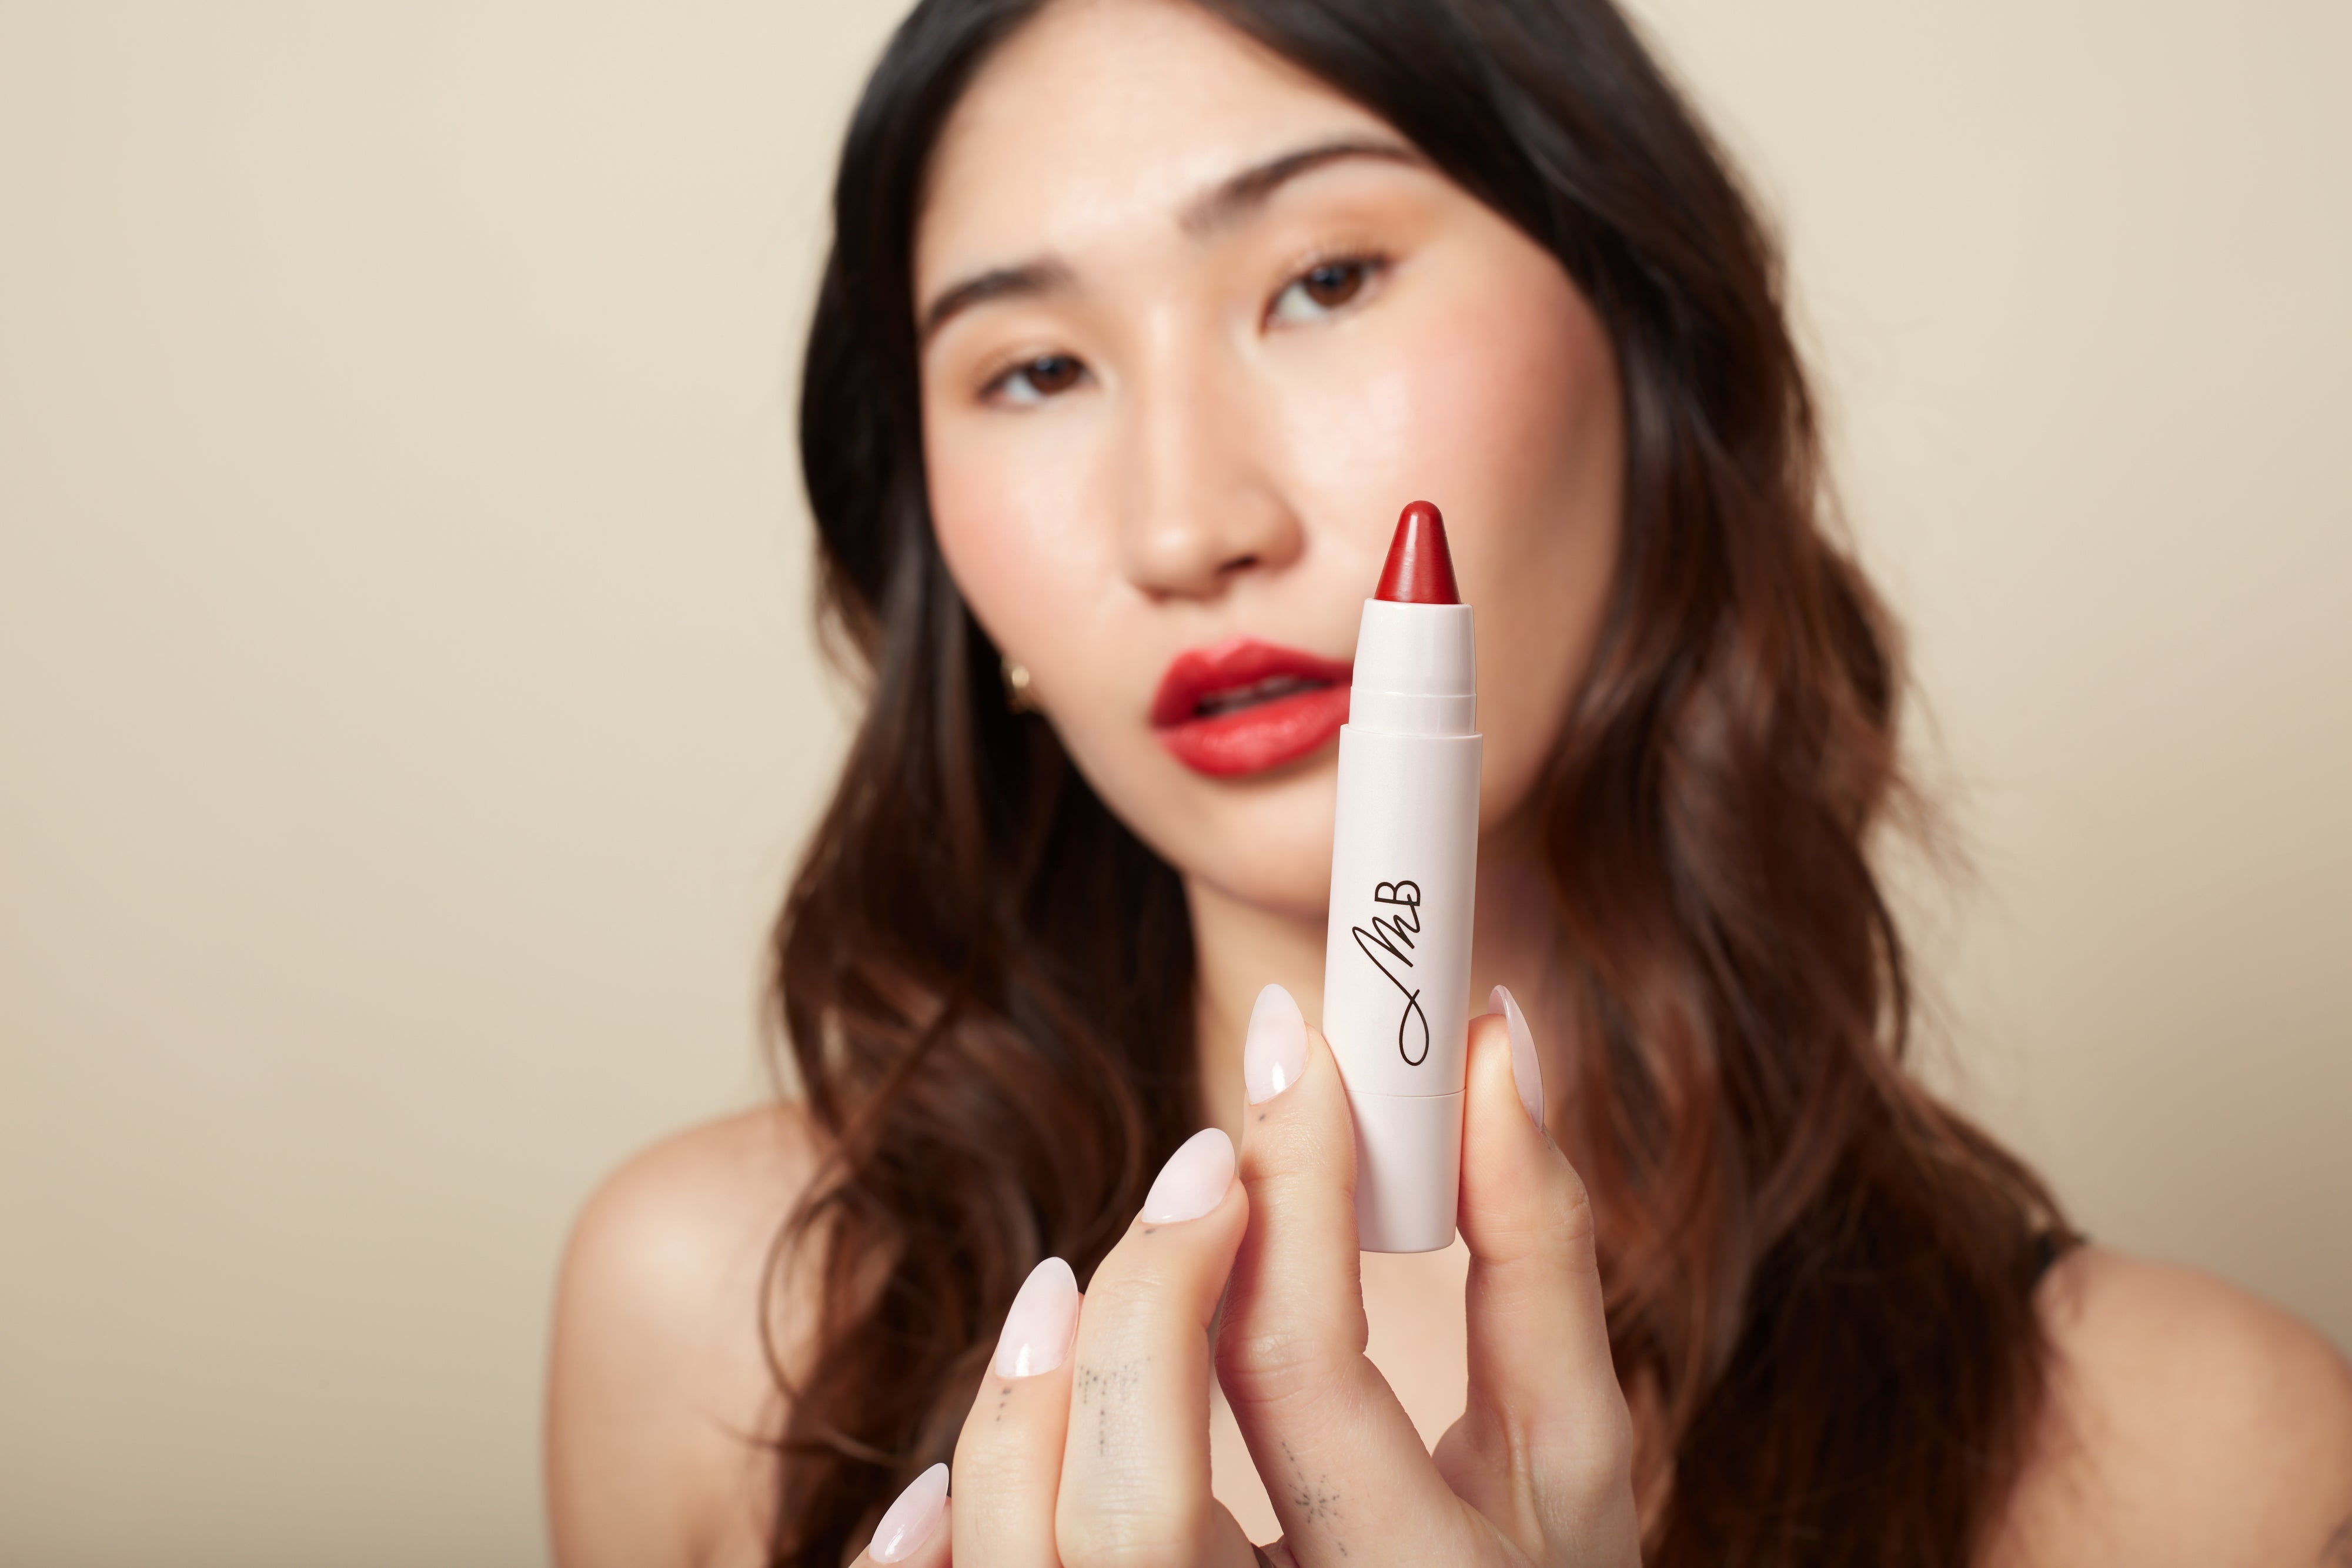 Kissen Lush Lipstick Crayon - Matilda | Monikablunderbeauty.com